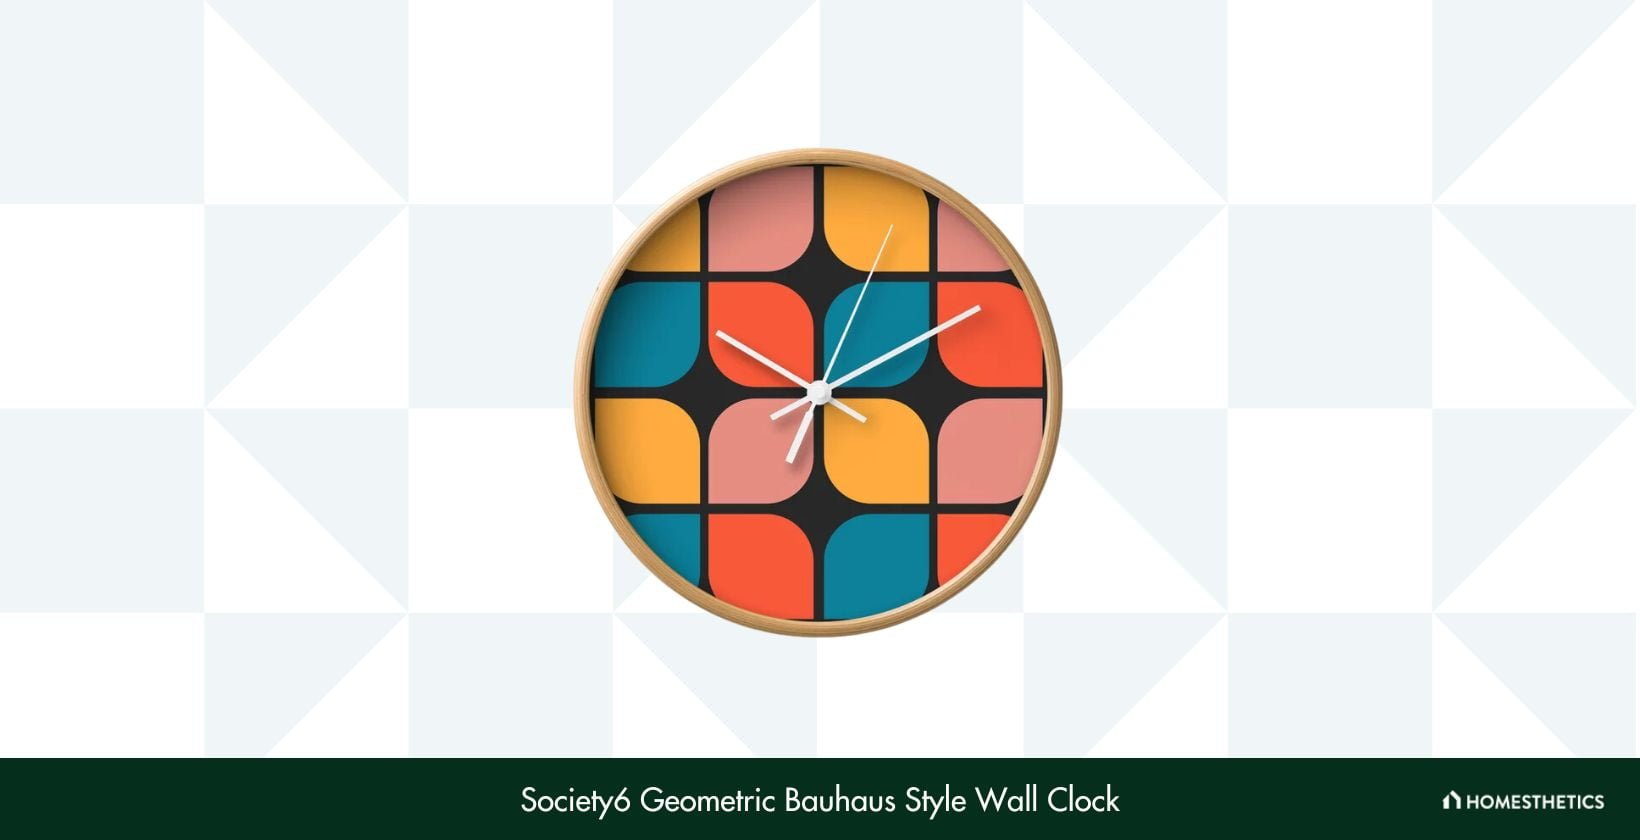 Society6 Geometric Bauhaus Style Wall Clock